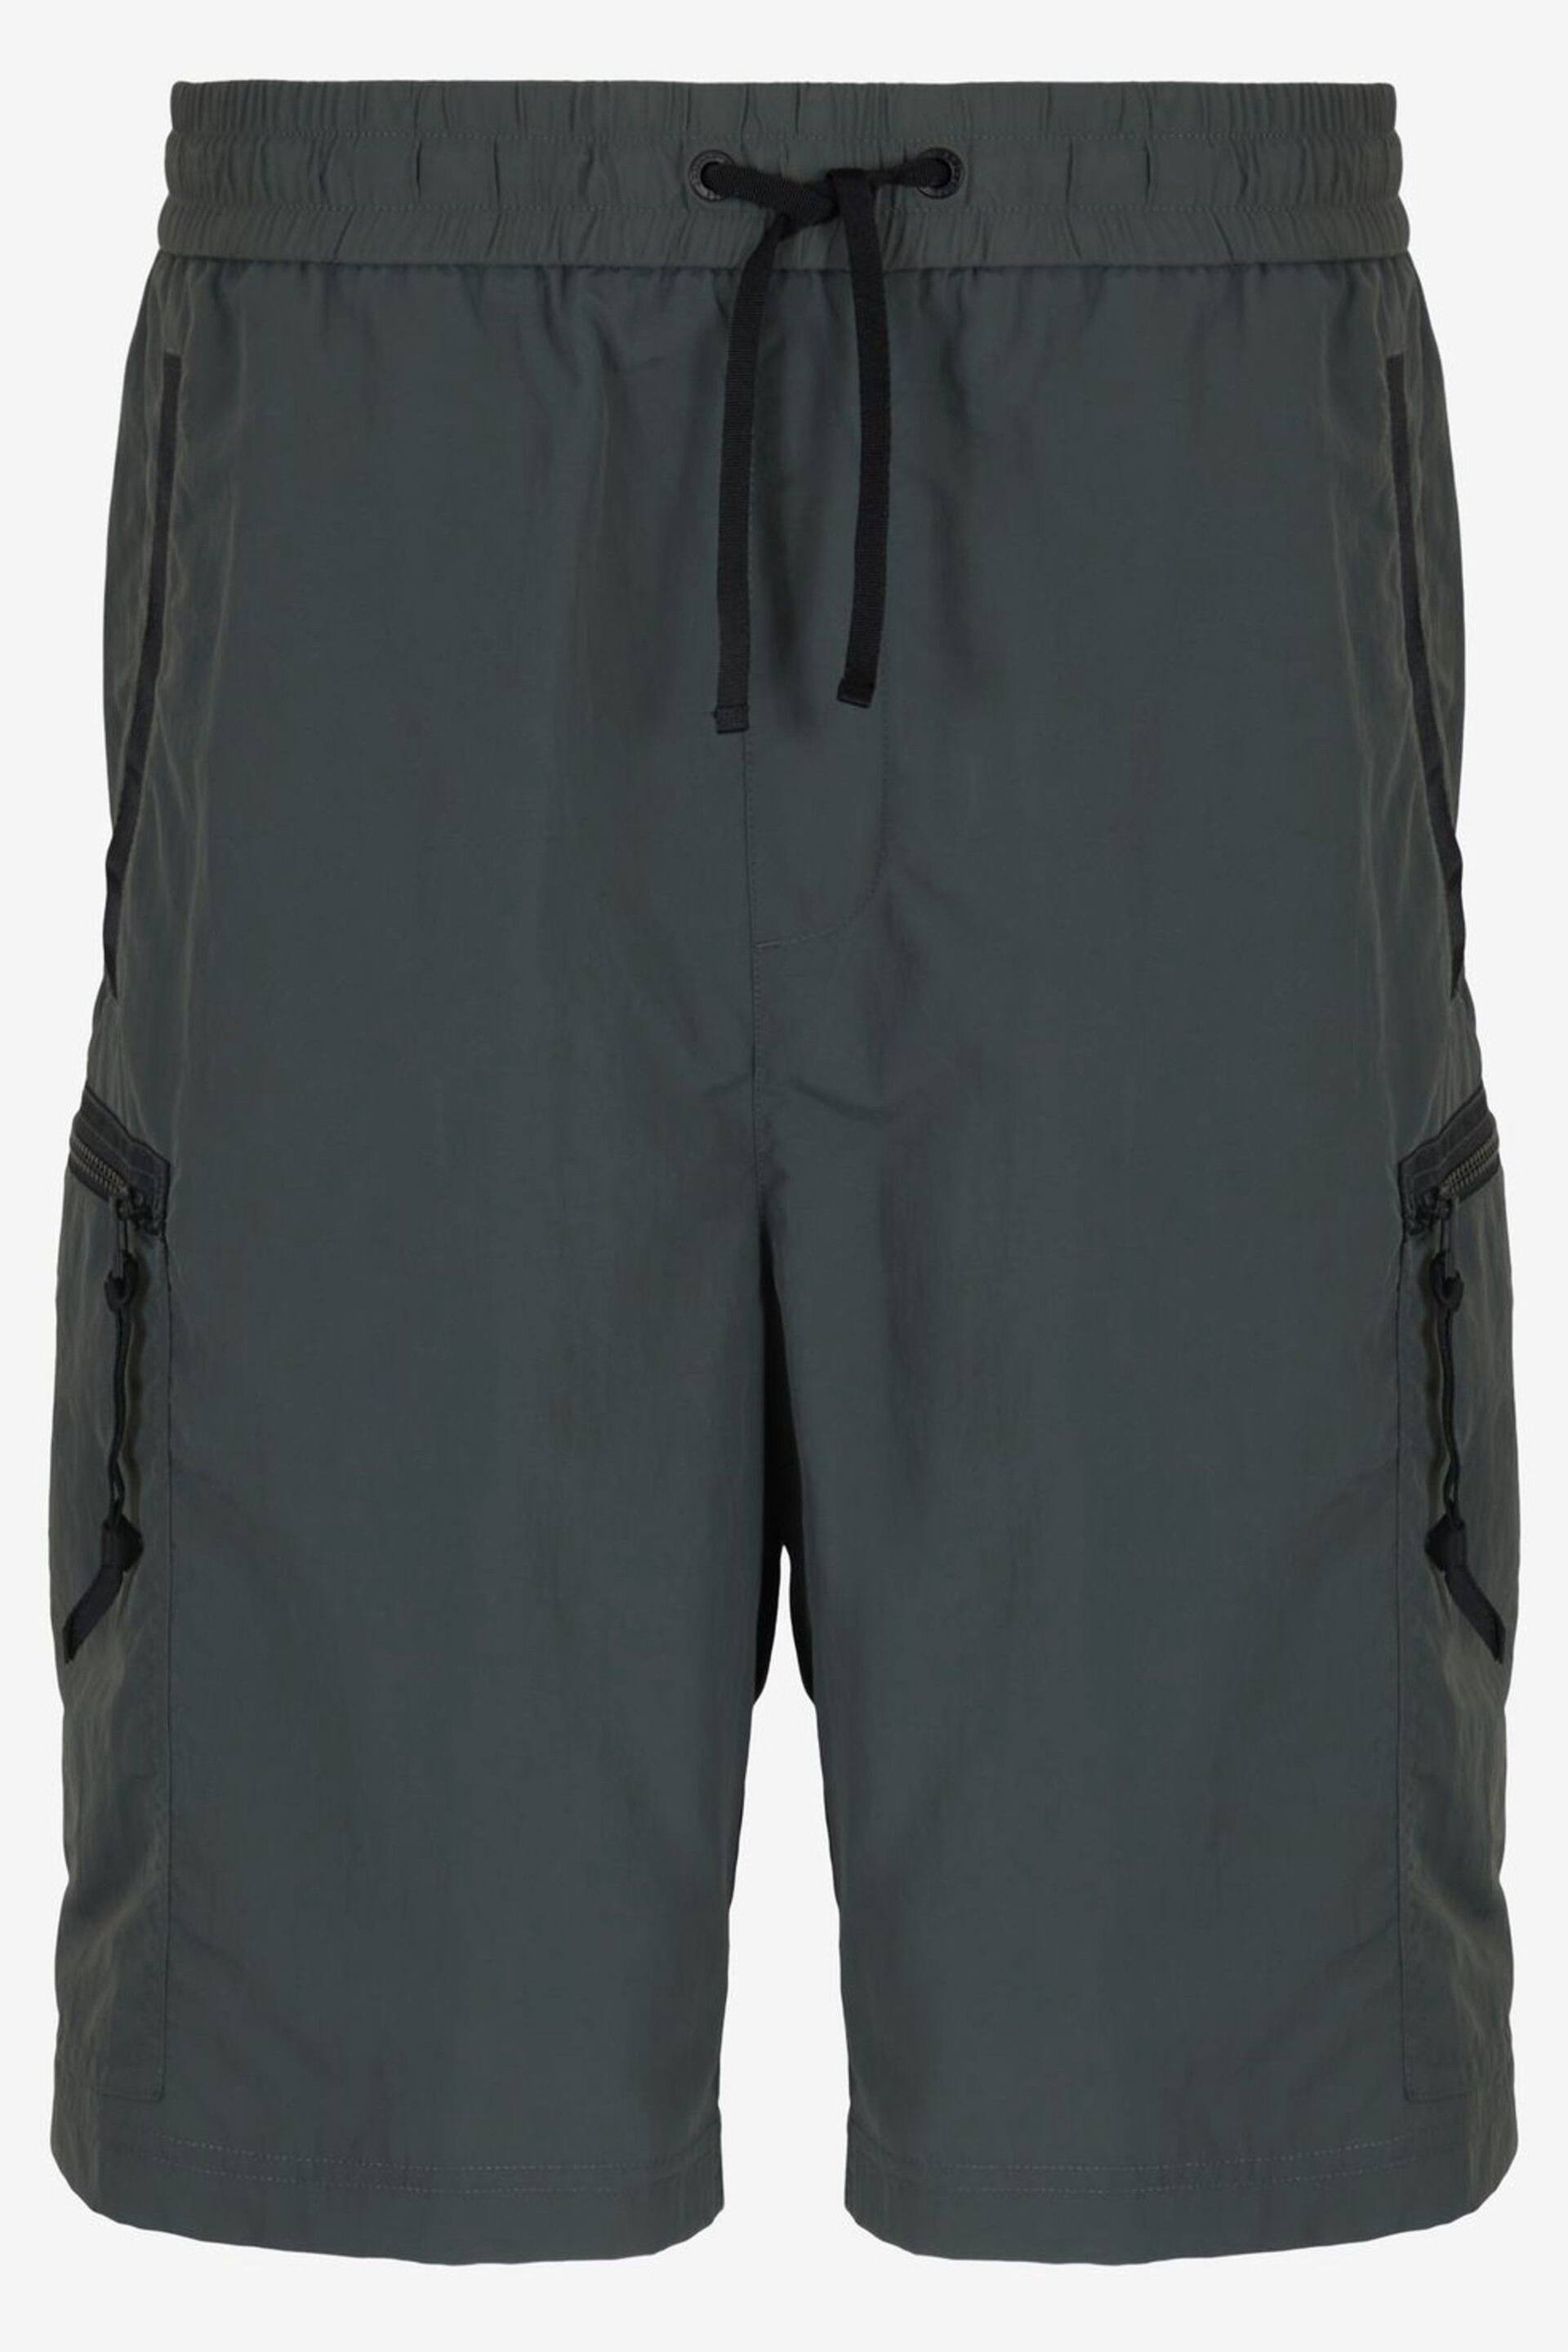 Armani Exchange Dark Grey Cargo Shorts - Image 7 of 8